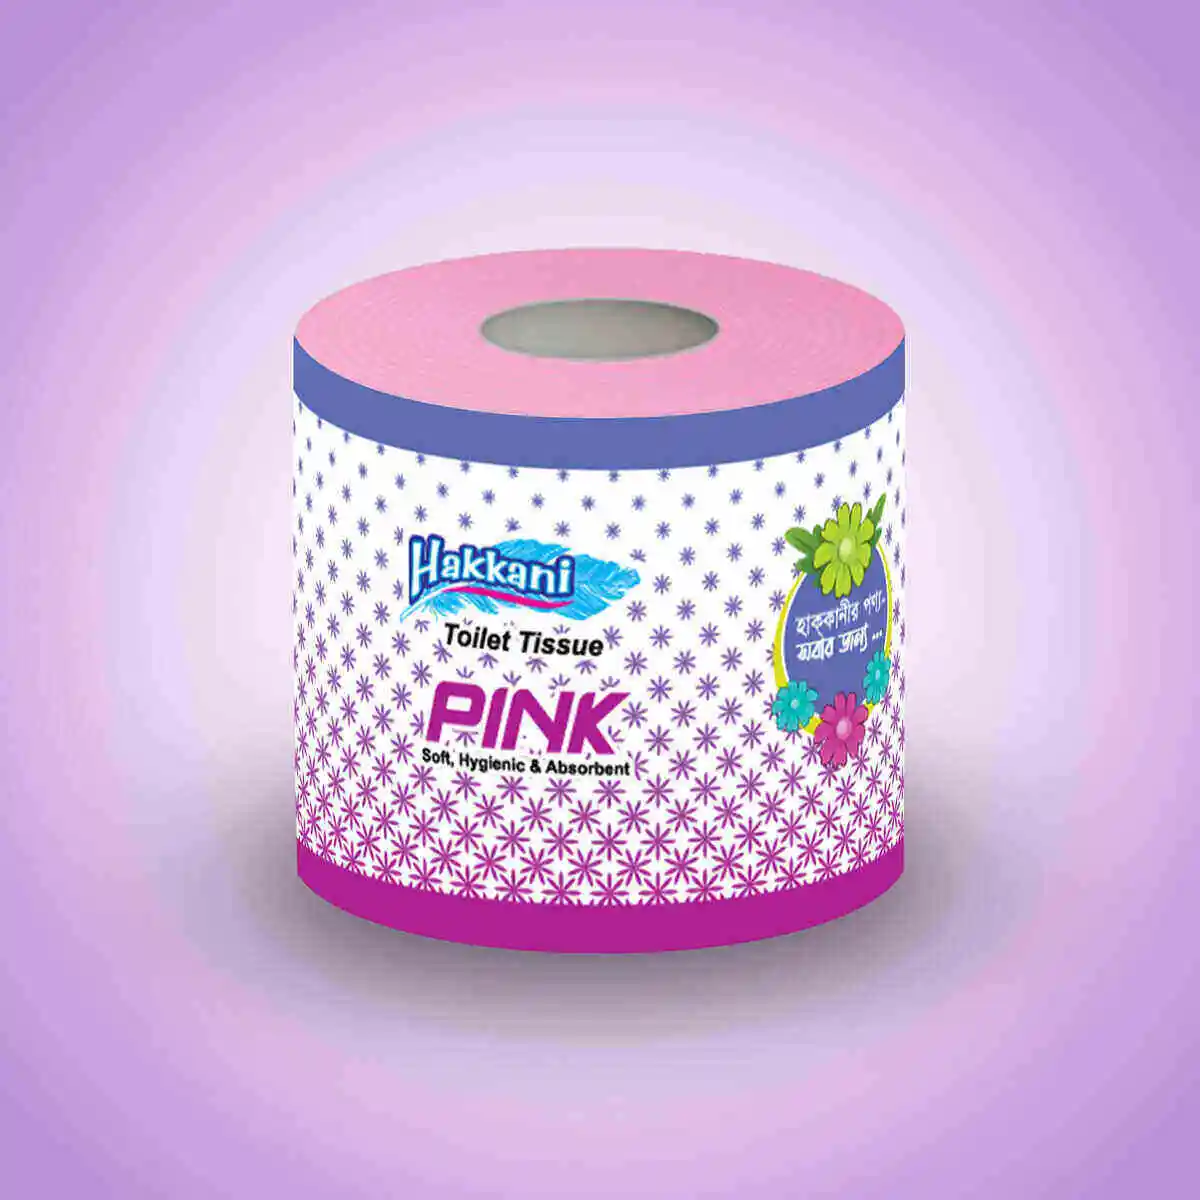 Hakkani Pink Toilet Tissue